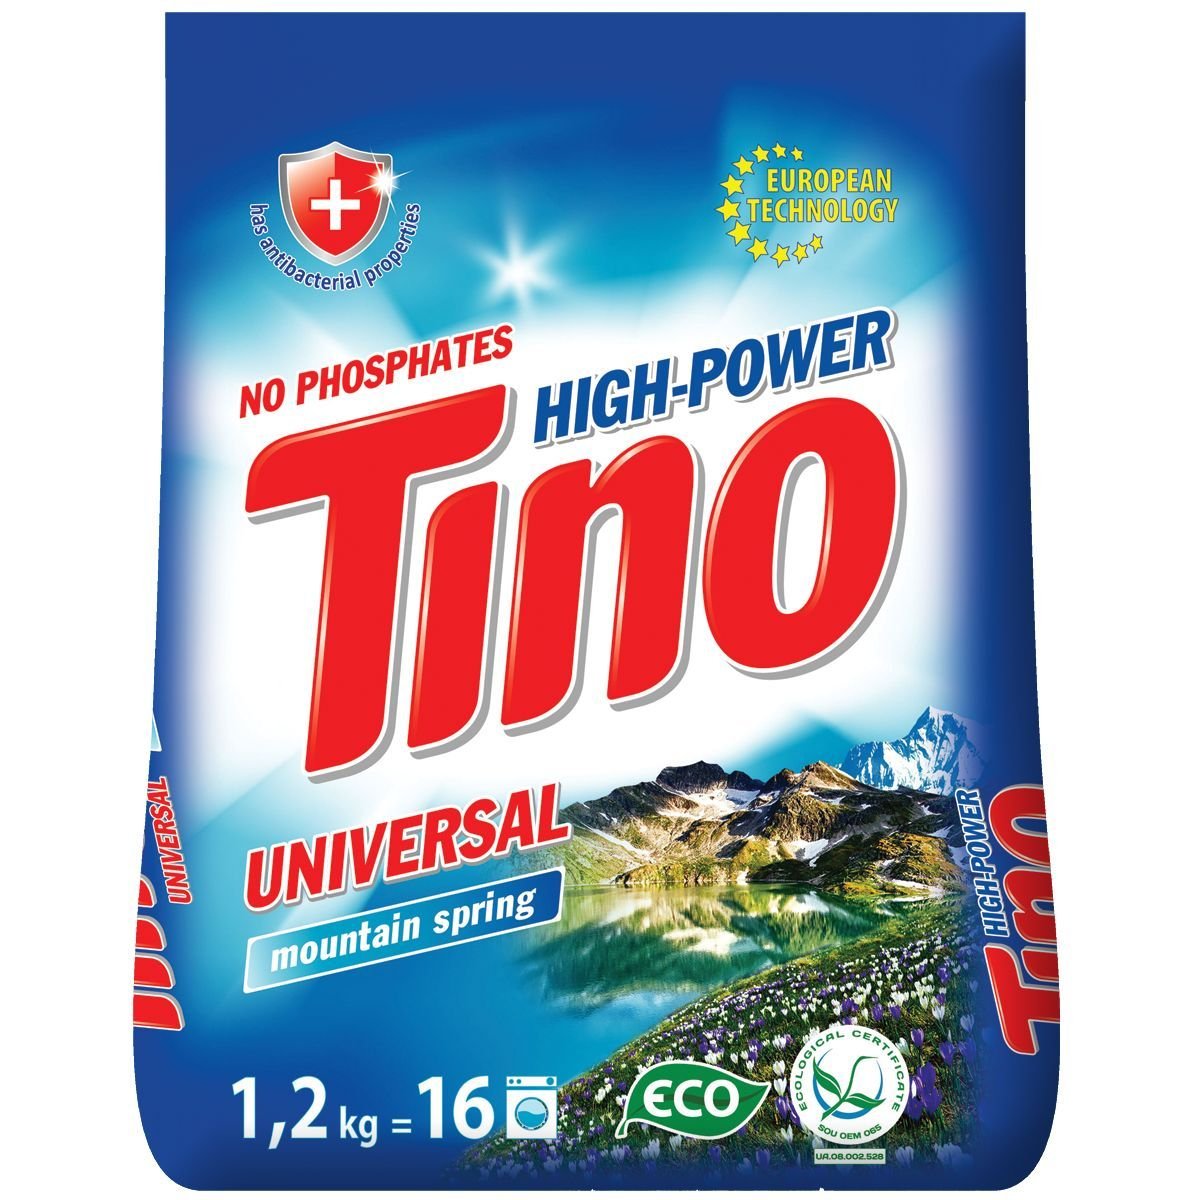 Photos - Laundry Detergent Порошок пральний Tino High-Power Universal Mountain spring, 1,2 кг